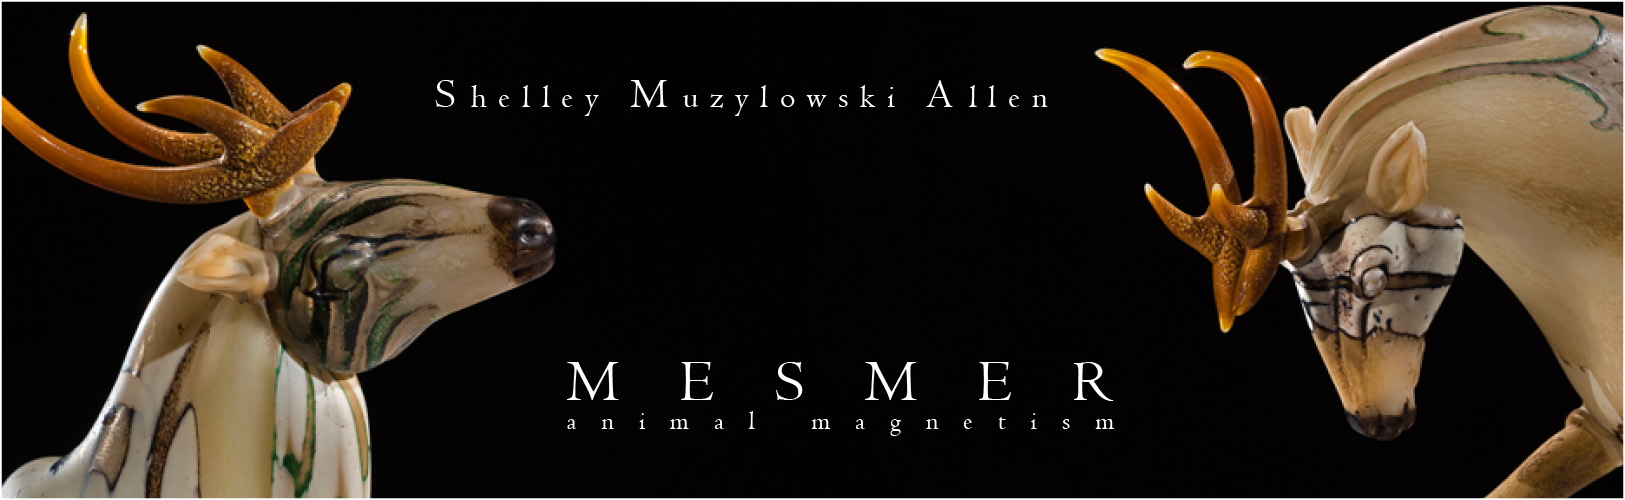 Shelley Muzylowski Allen MESMER Animal Magnetism Habatat Galleries October 2014